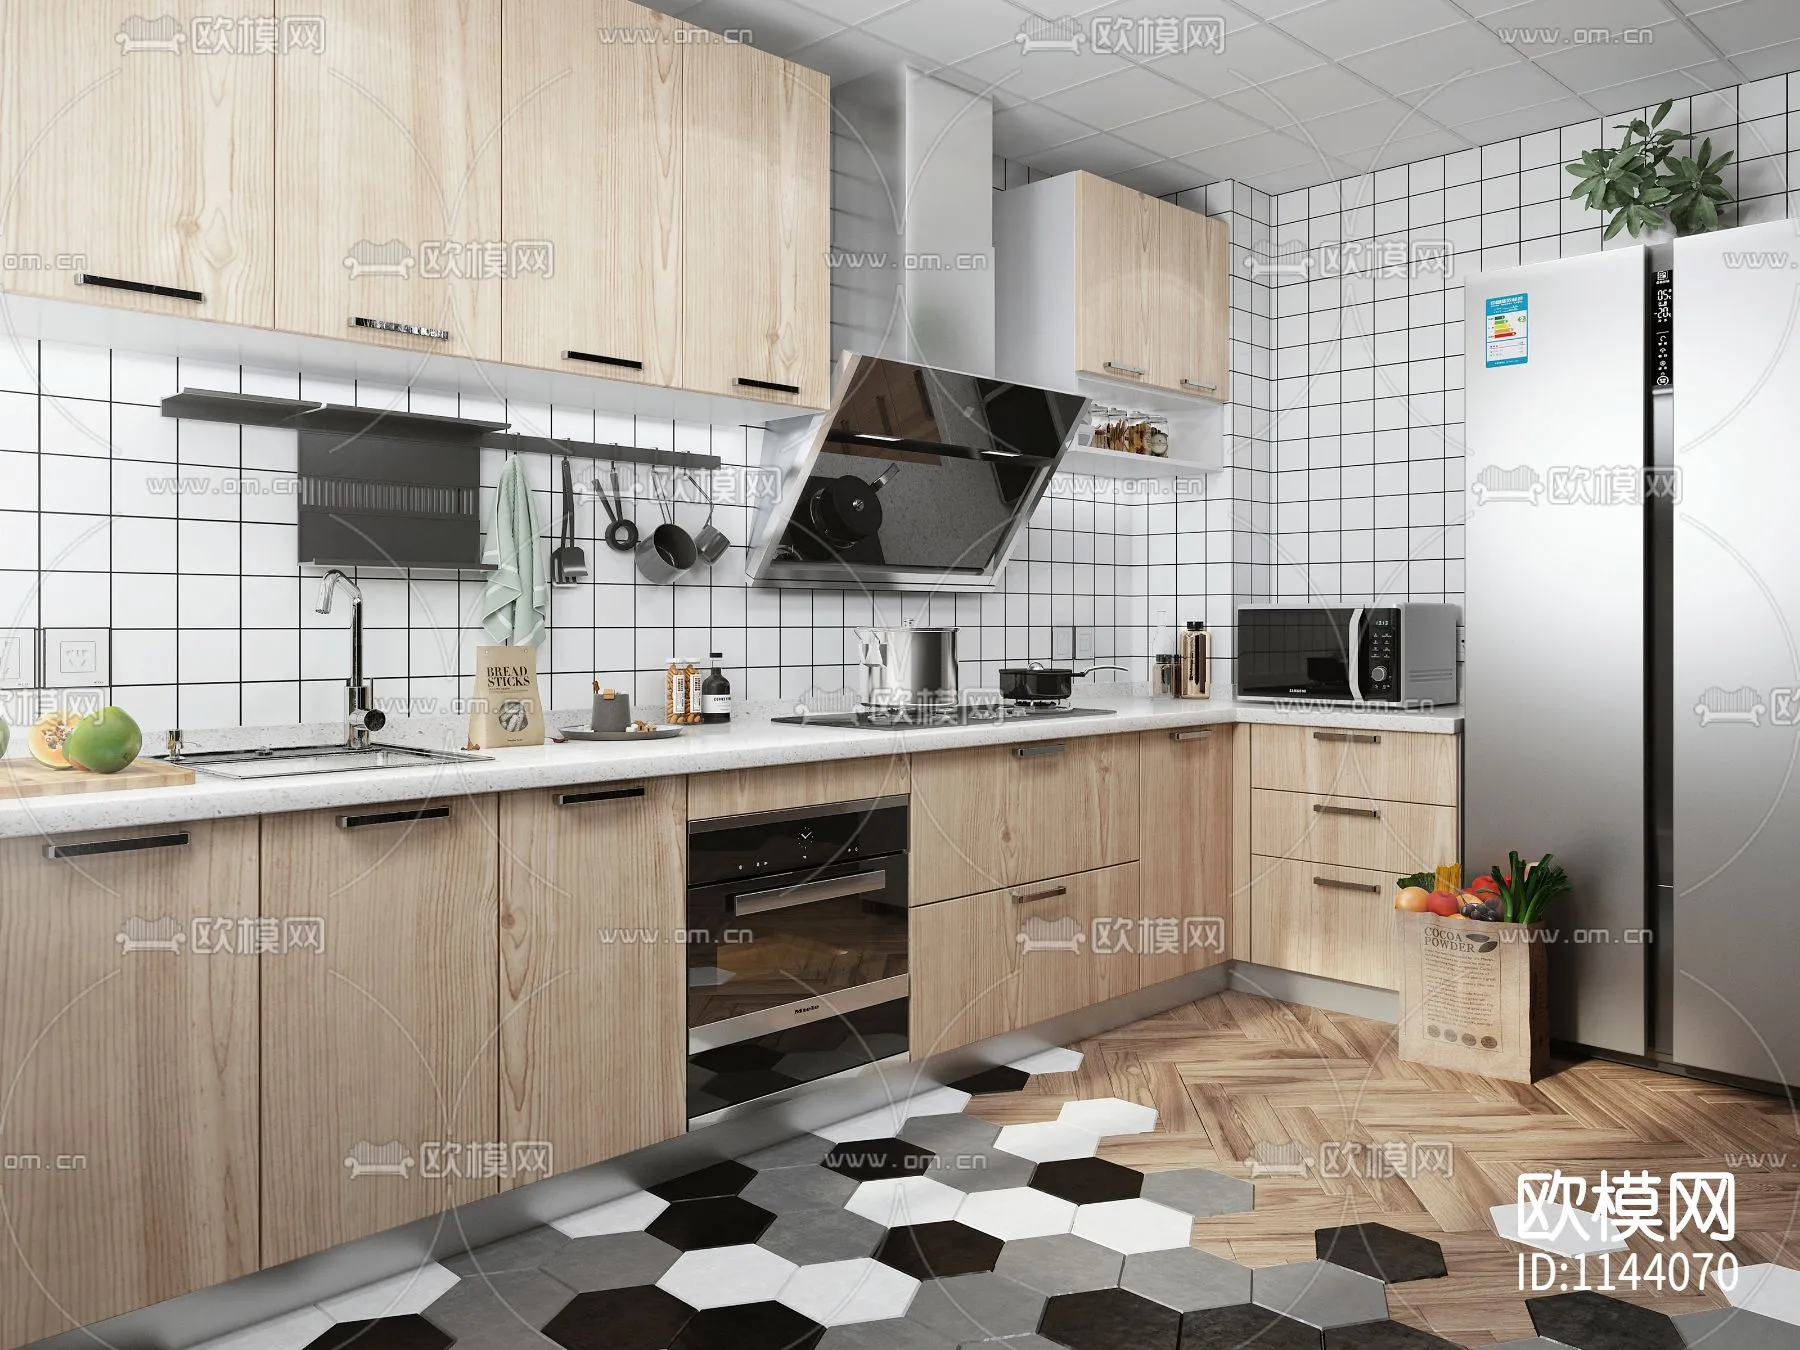 Kitchen 3D Scenes – 0545